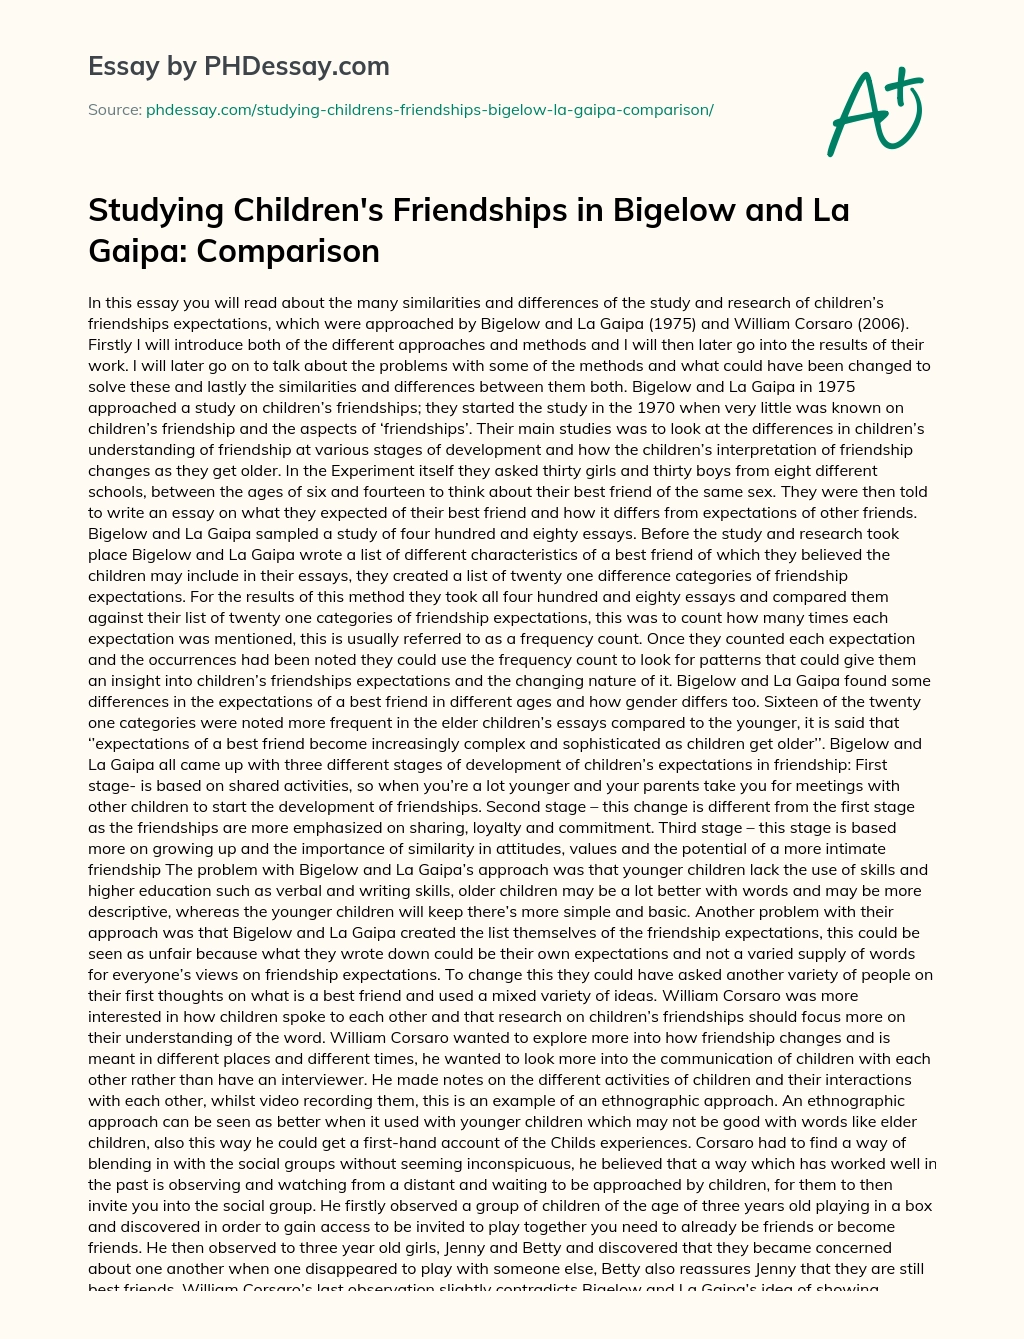 Studying Children’s Friendships in Bigelow and La Gaipa: Comparison essay